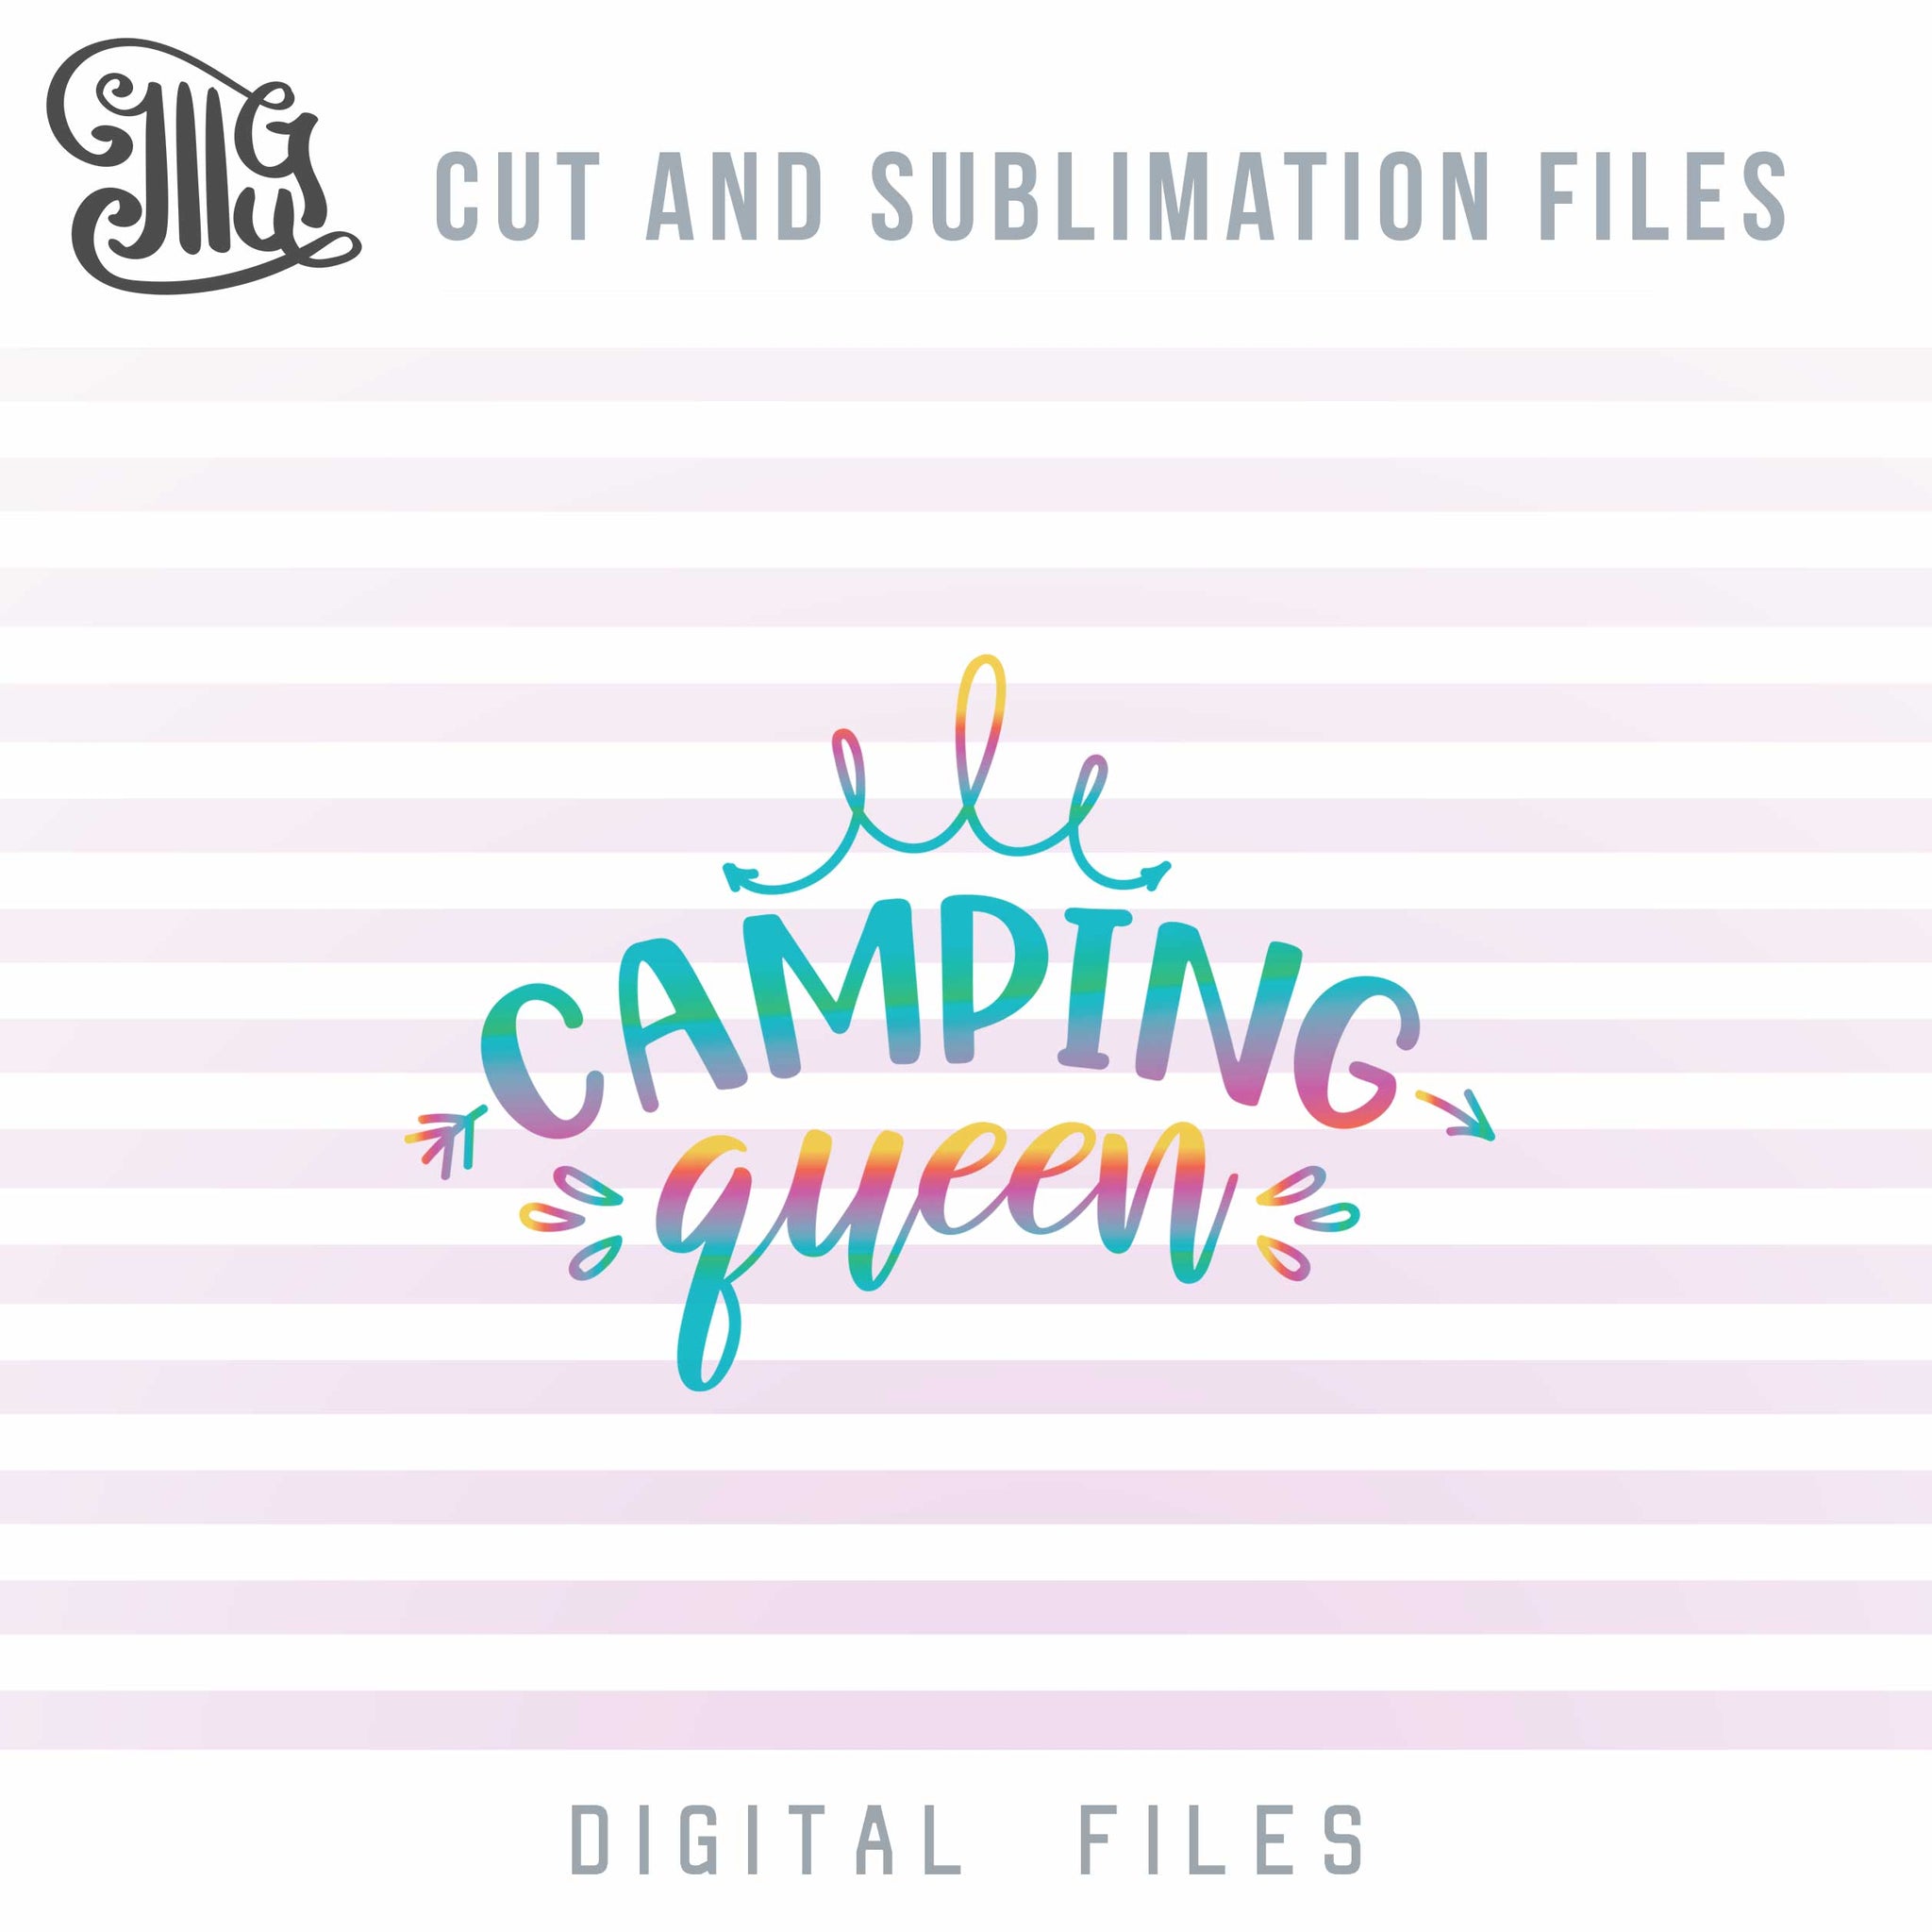 Download Camping Svg Campsite Svg Camping Sayings Camping Quotes Svg Campin Illustrator Guru